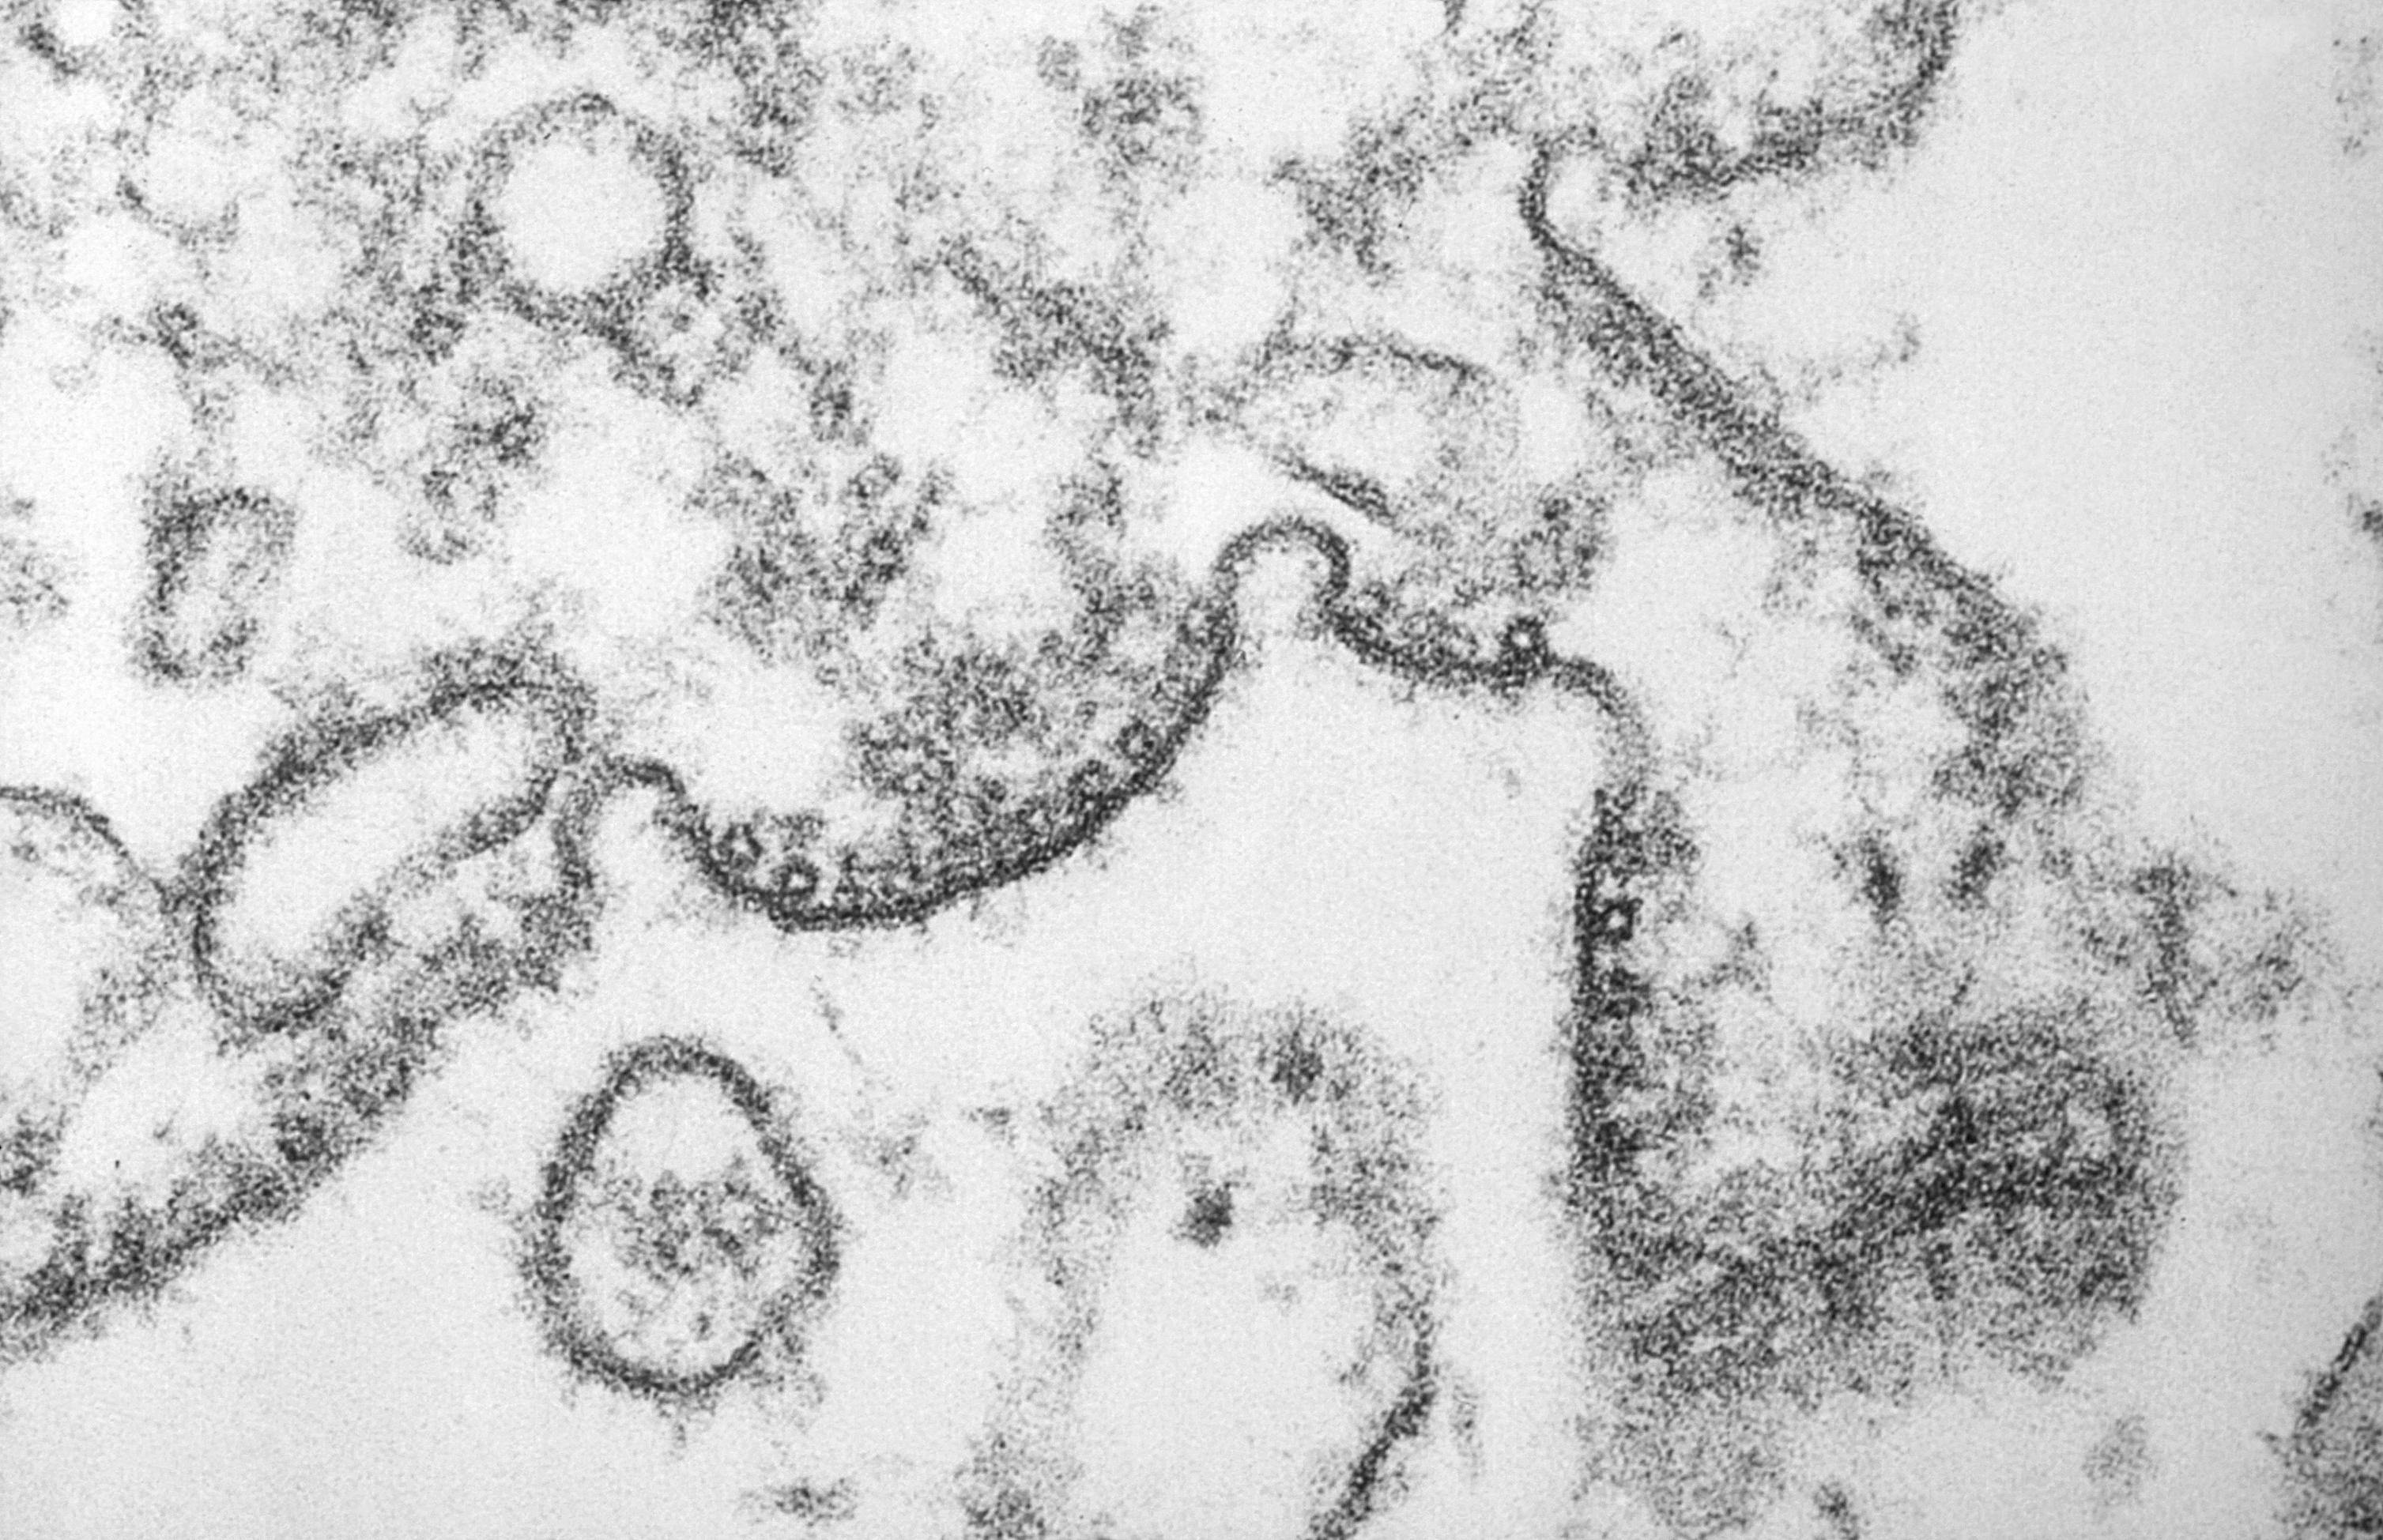 Nipah Virus Outbreak in Southern India